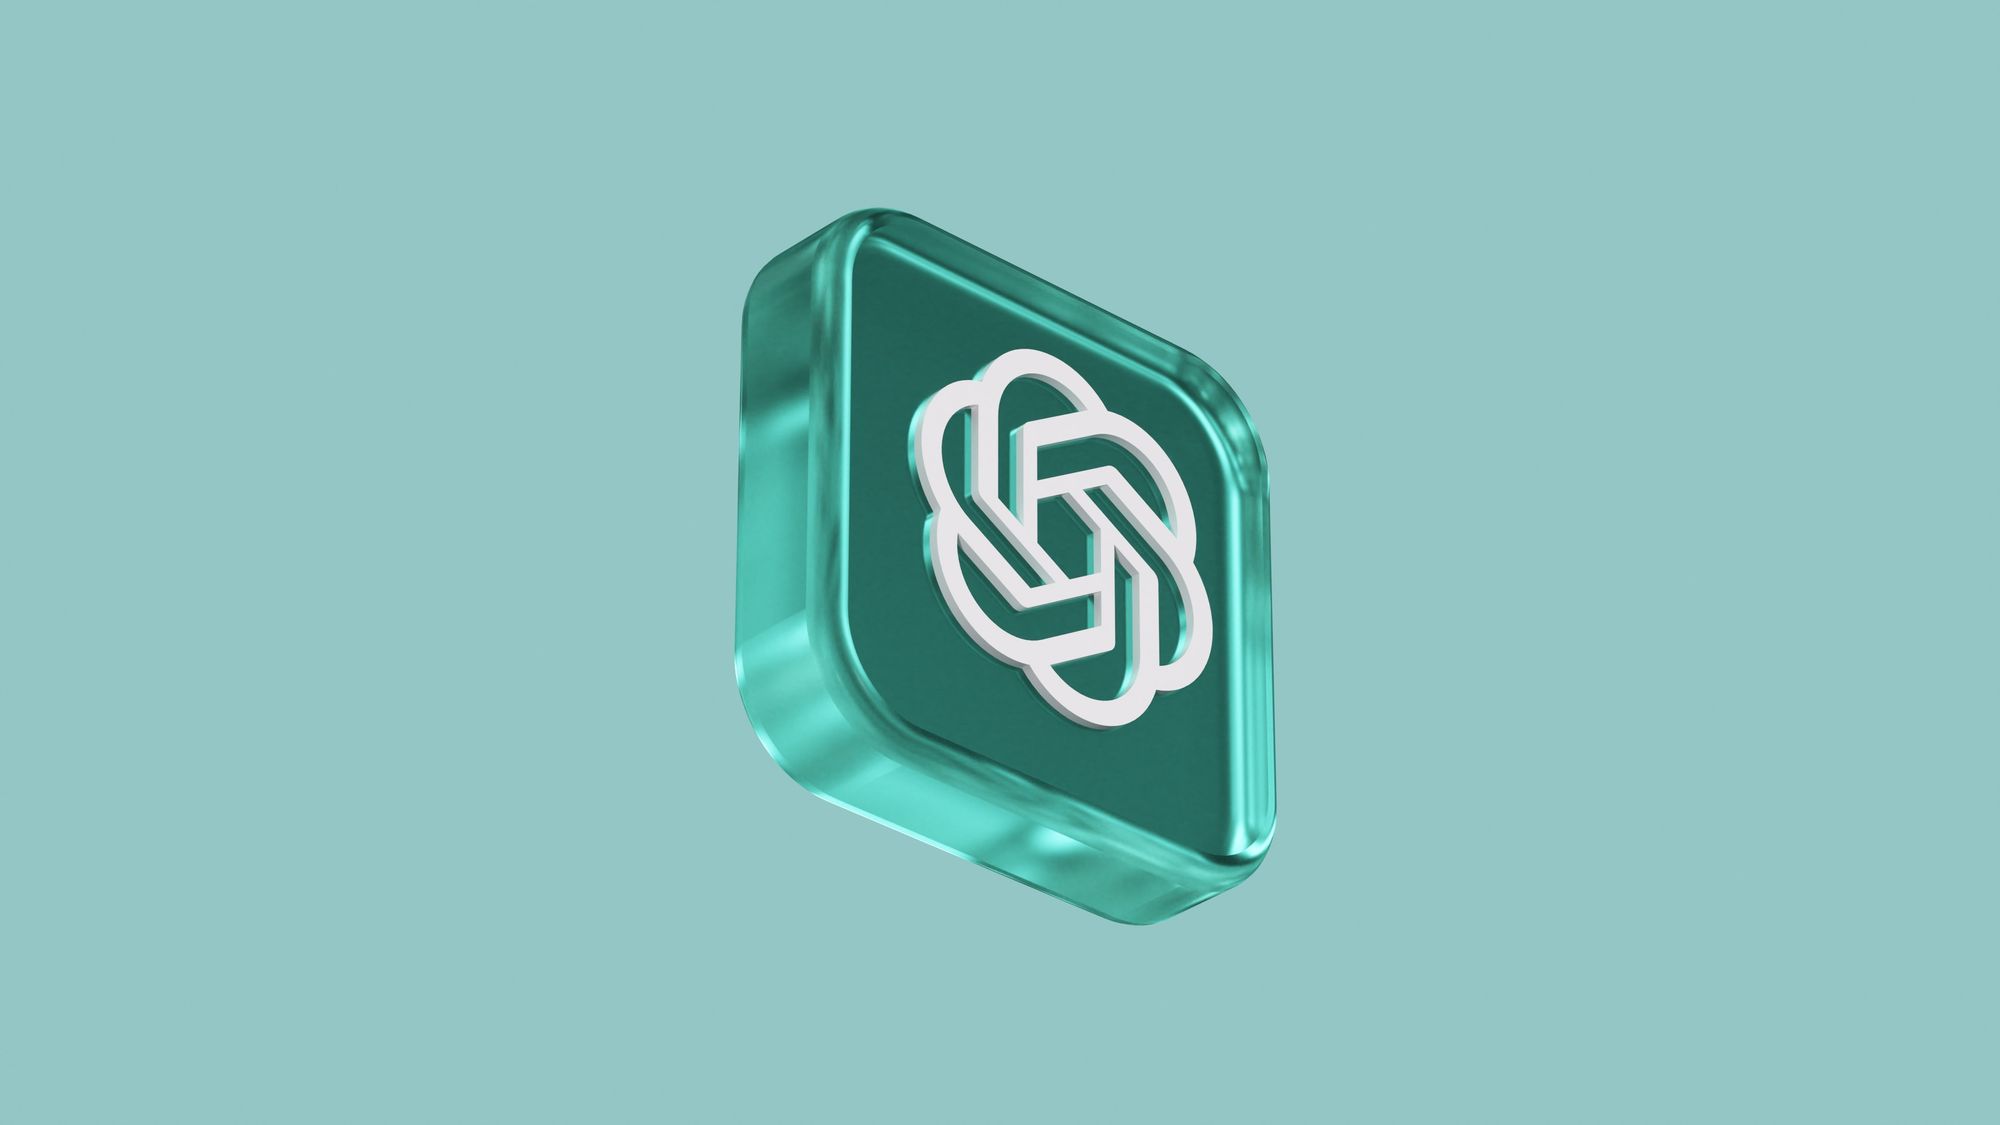 ChatGPT logo in 3D